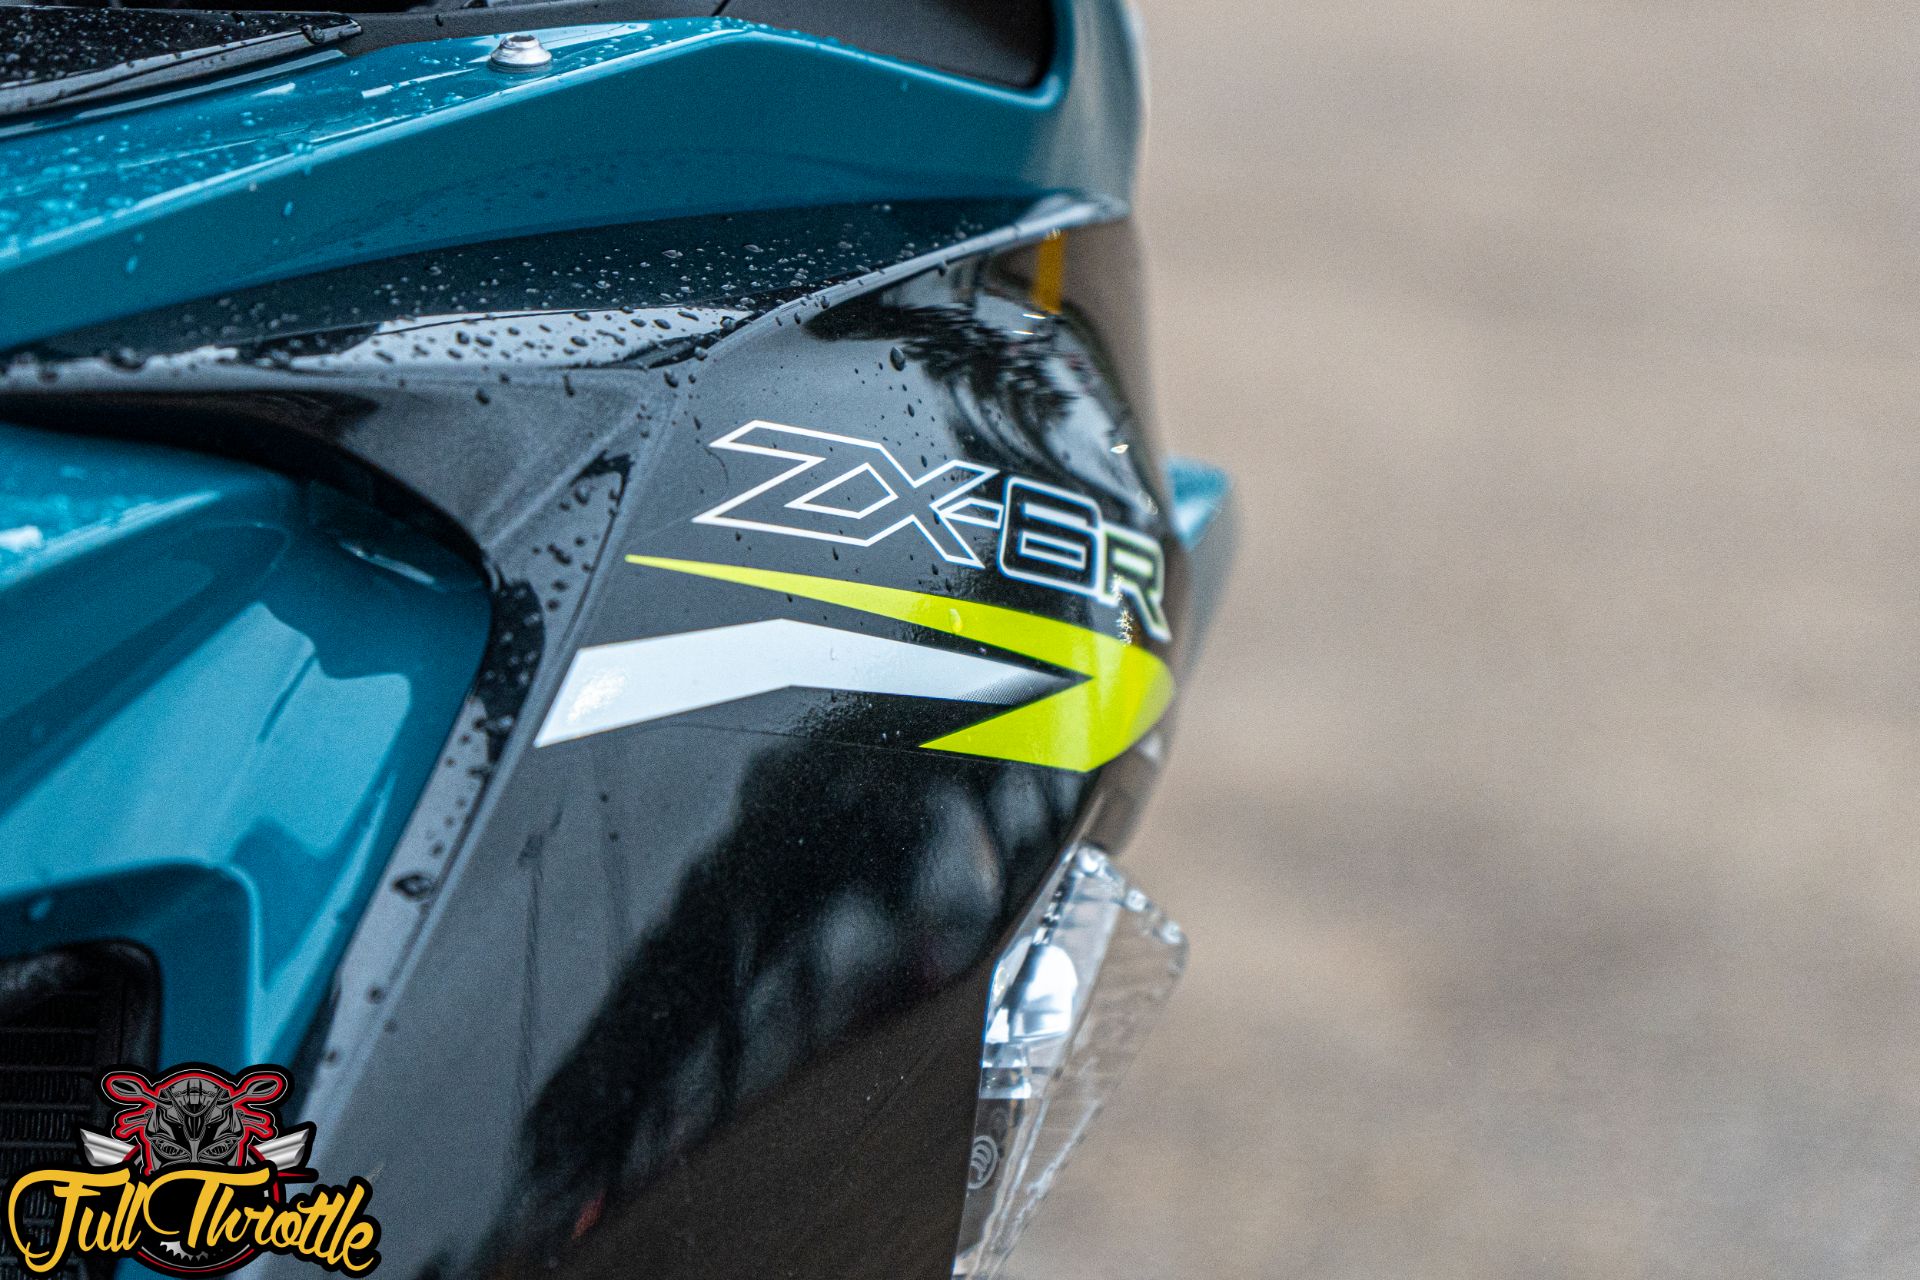 2021 Kawasaki Ninja ZX-6R ABS KRT Edition in Houston, Texas - Photo 13